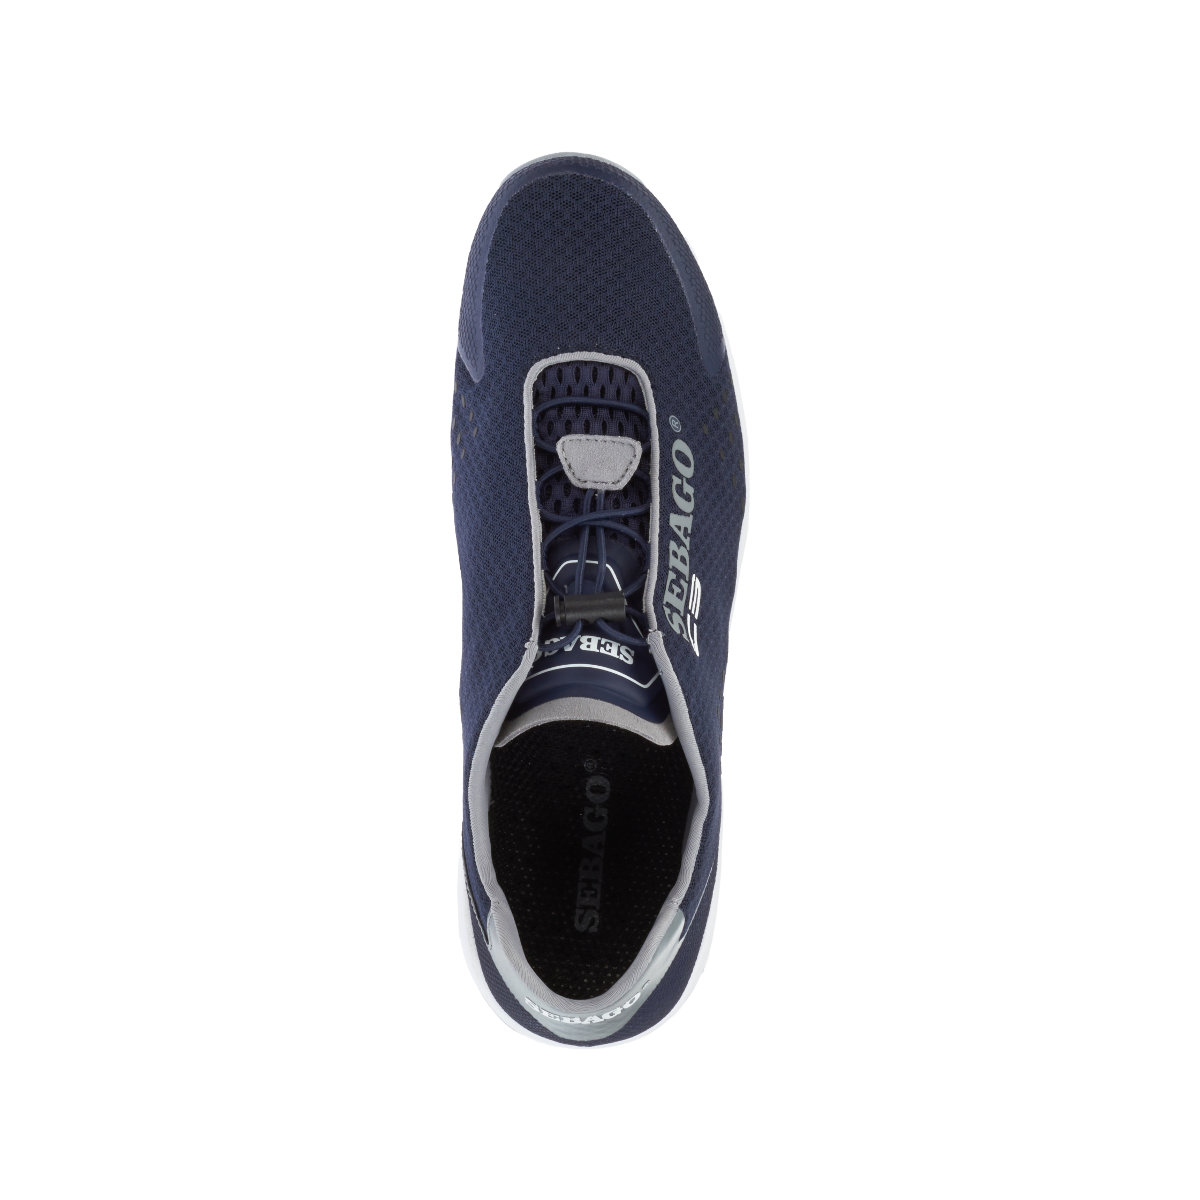 Sebago Cyphon Sea Sport chaussures à voile homme navy, taille EU 47 (US 12,5)